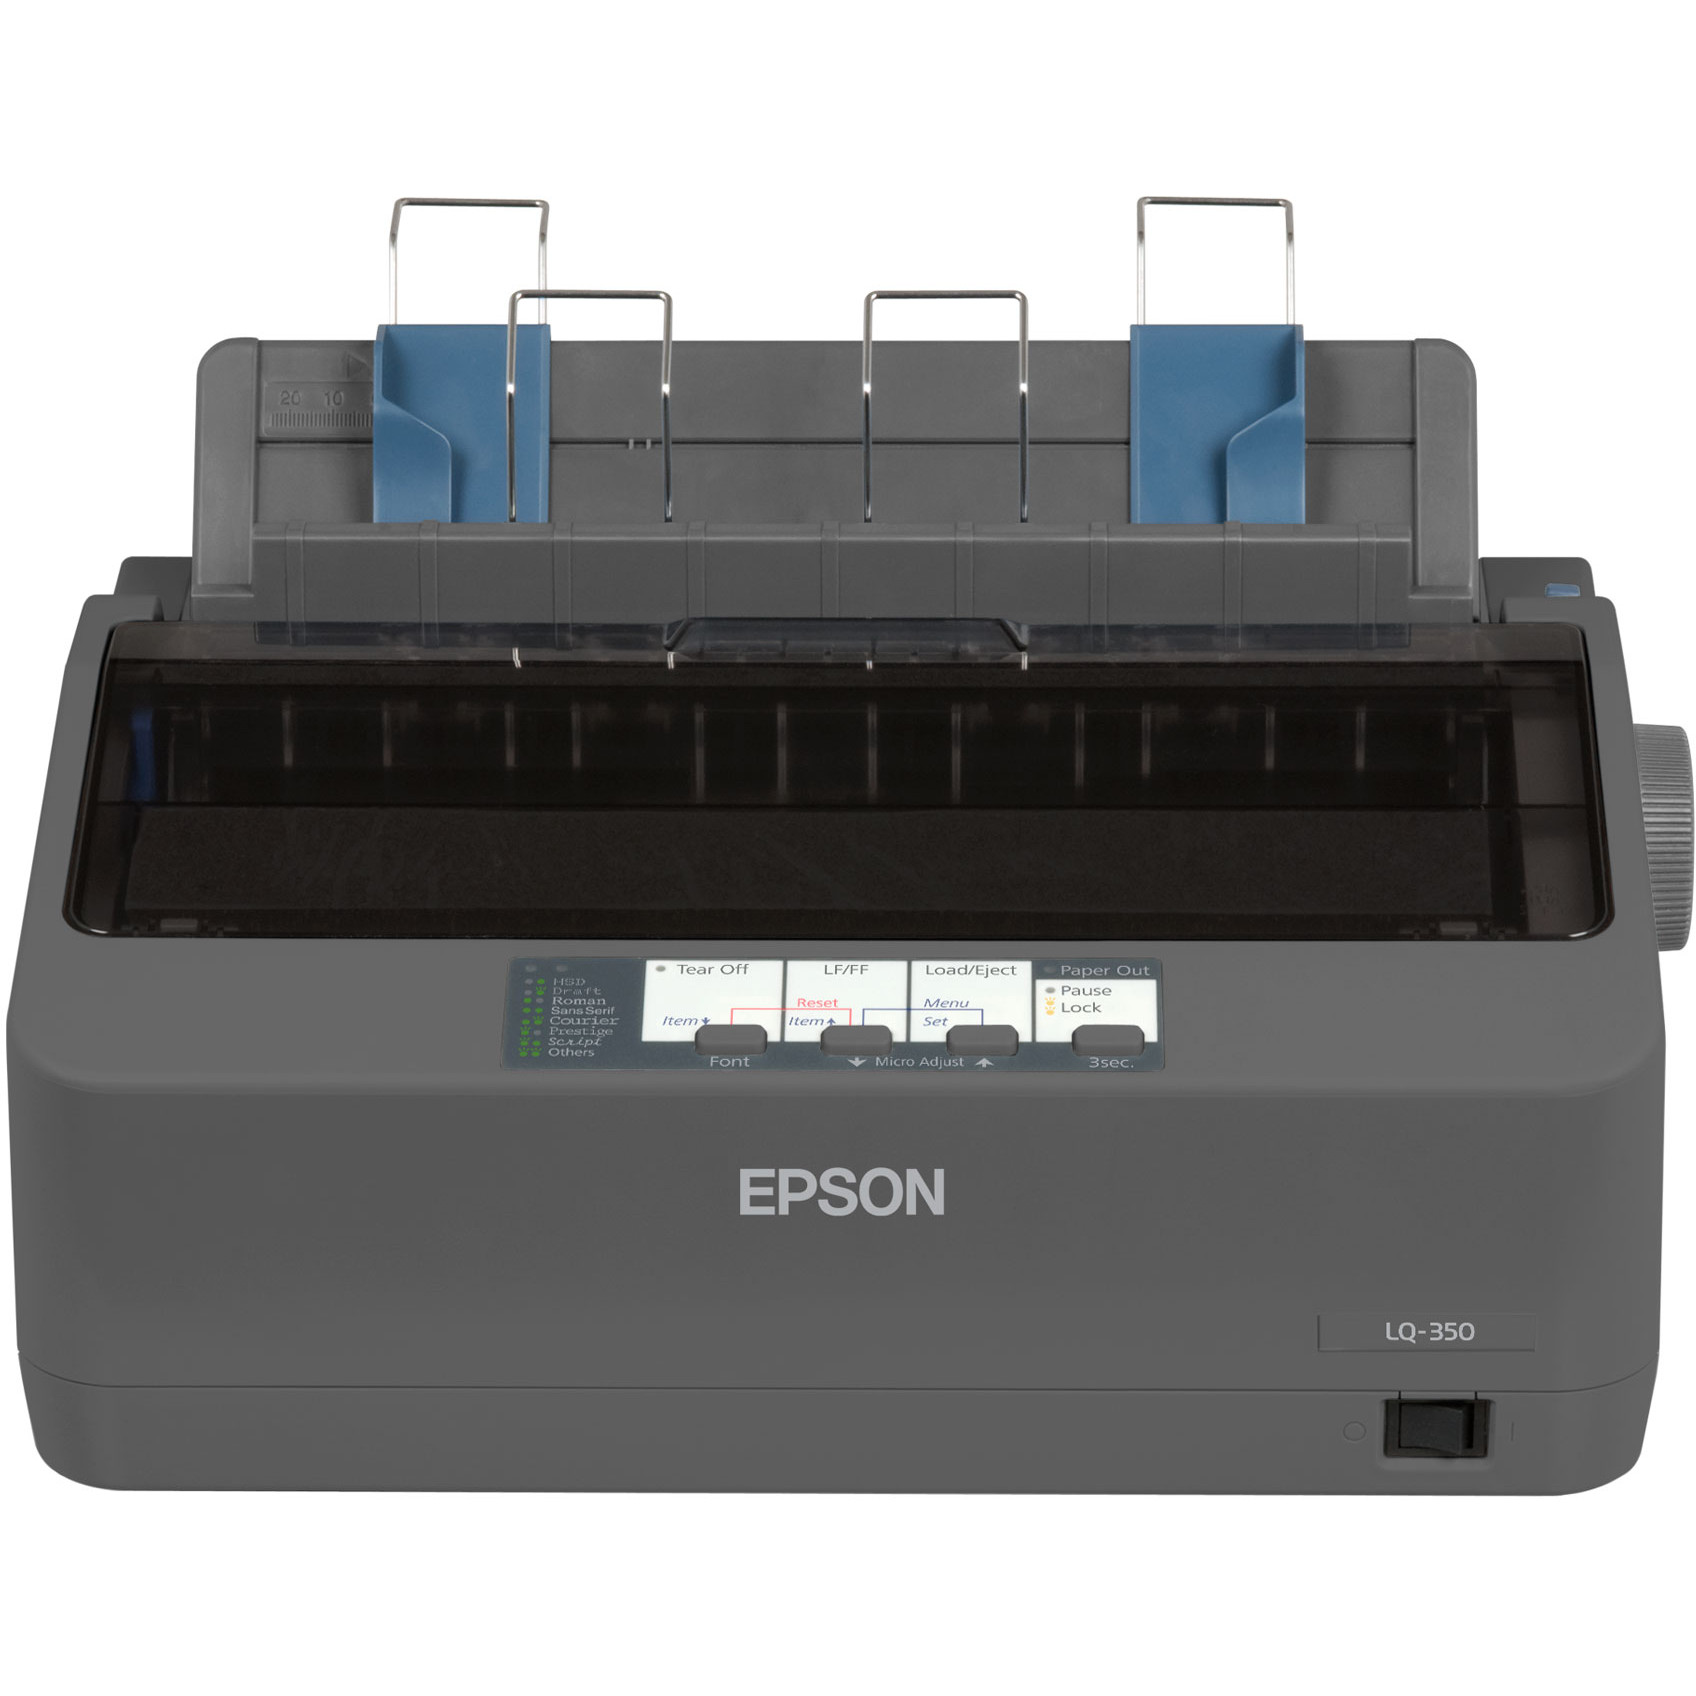  Imprimanta matriciala Epson LQ-350, A4 